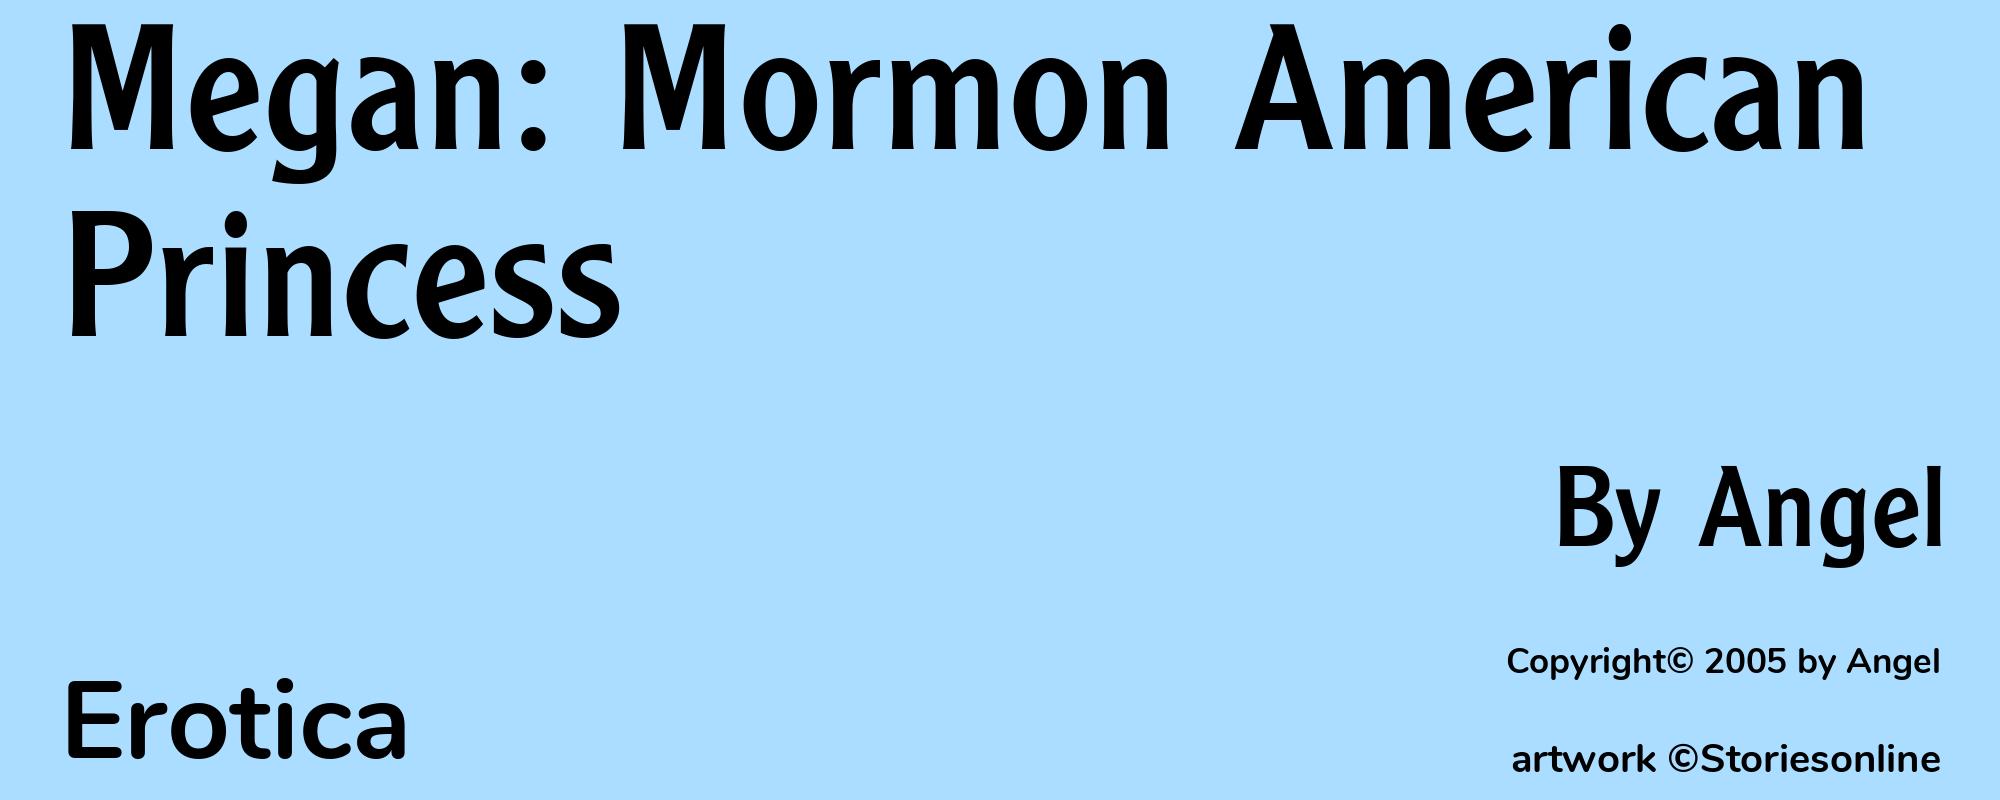 Megan: Mormon American Princess - Cover